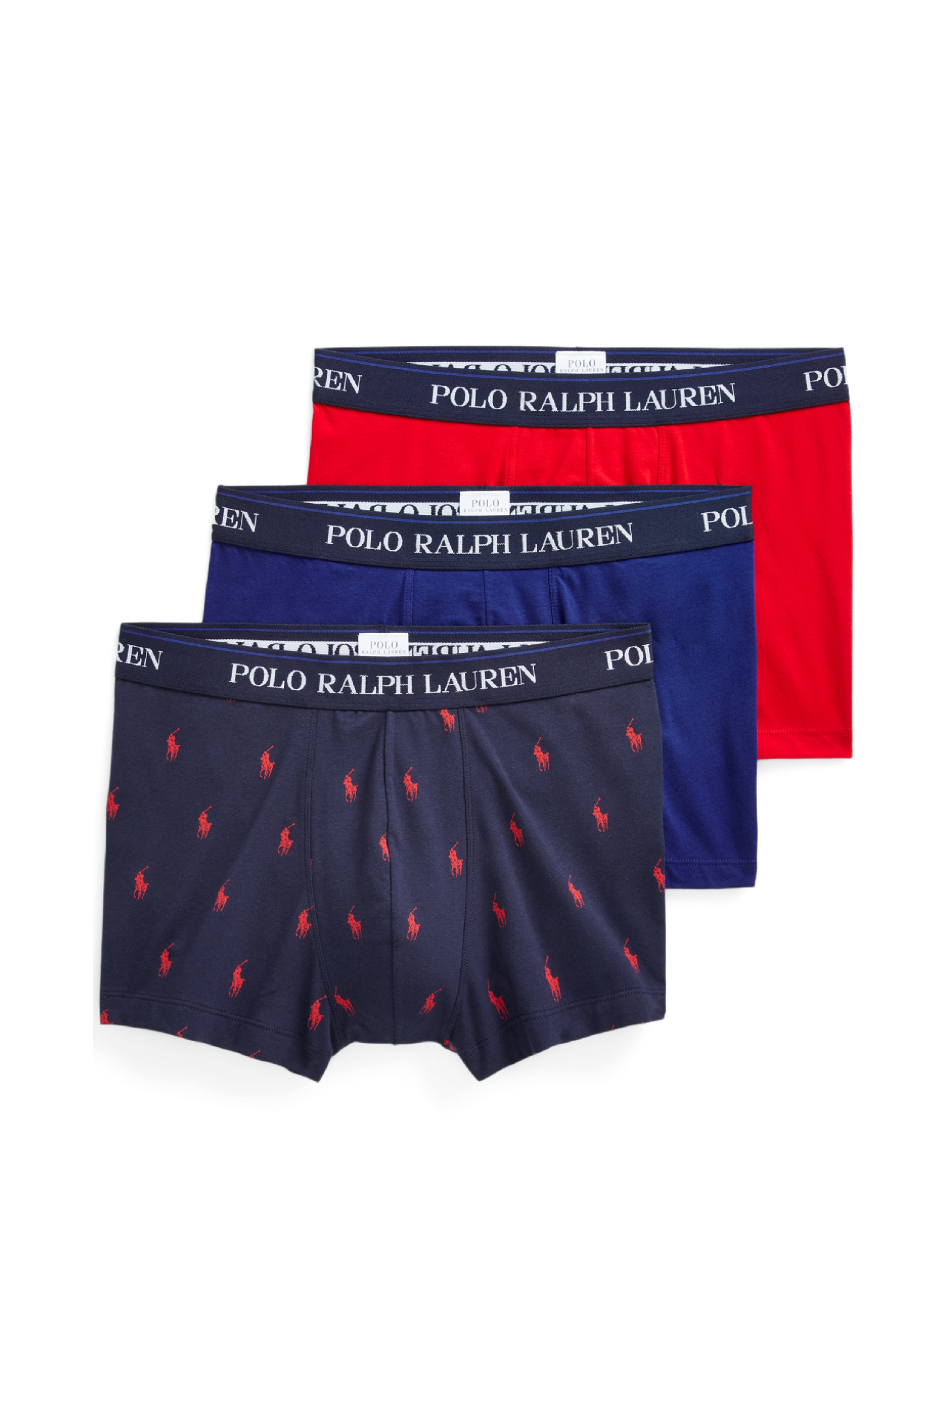 Polo Ralph Lauren 3 Pack Men's Trunk